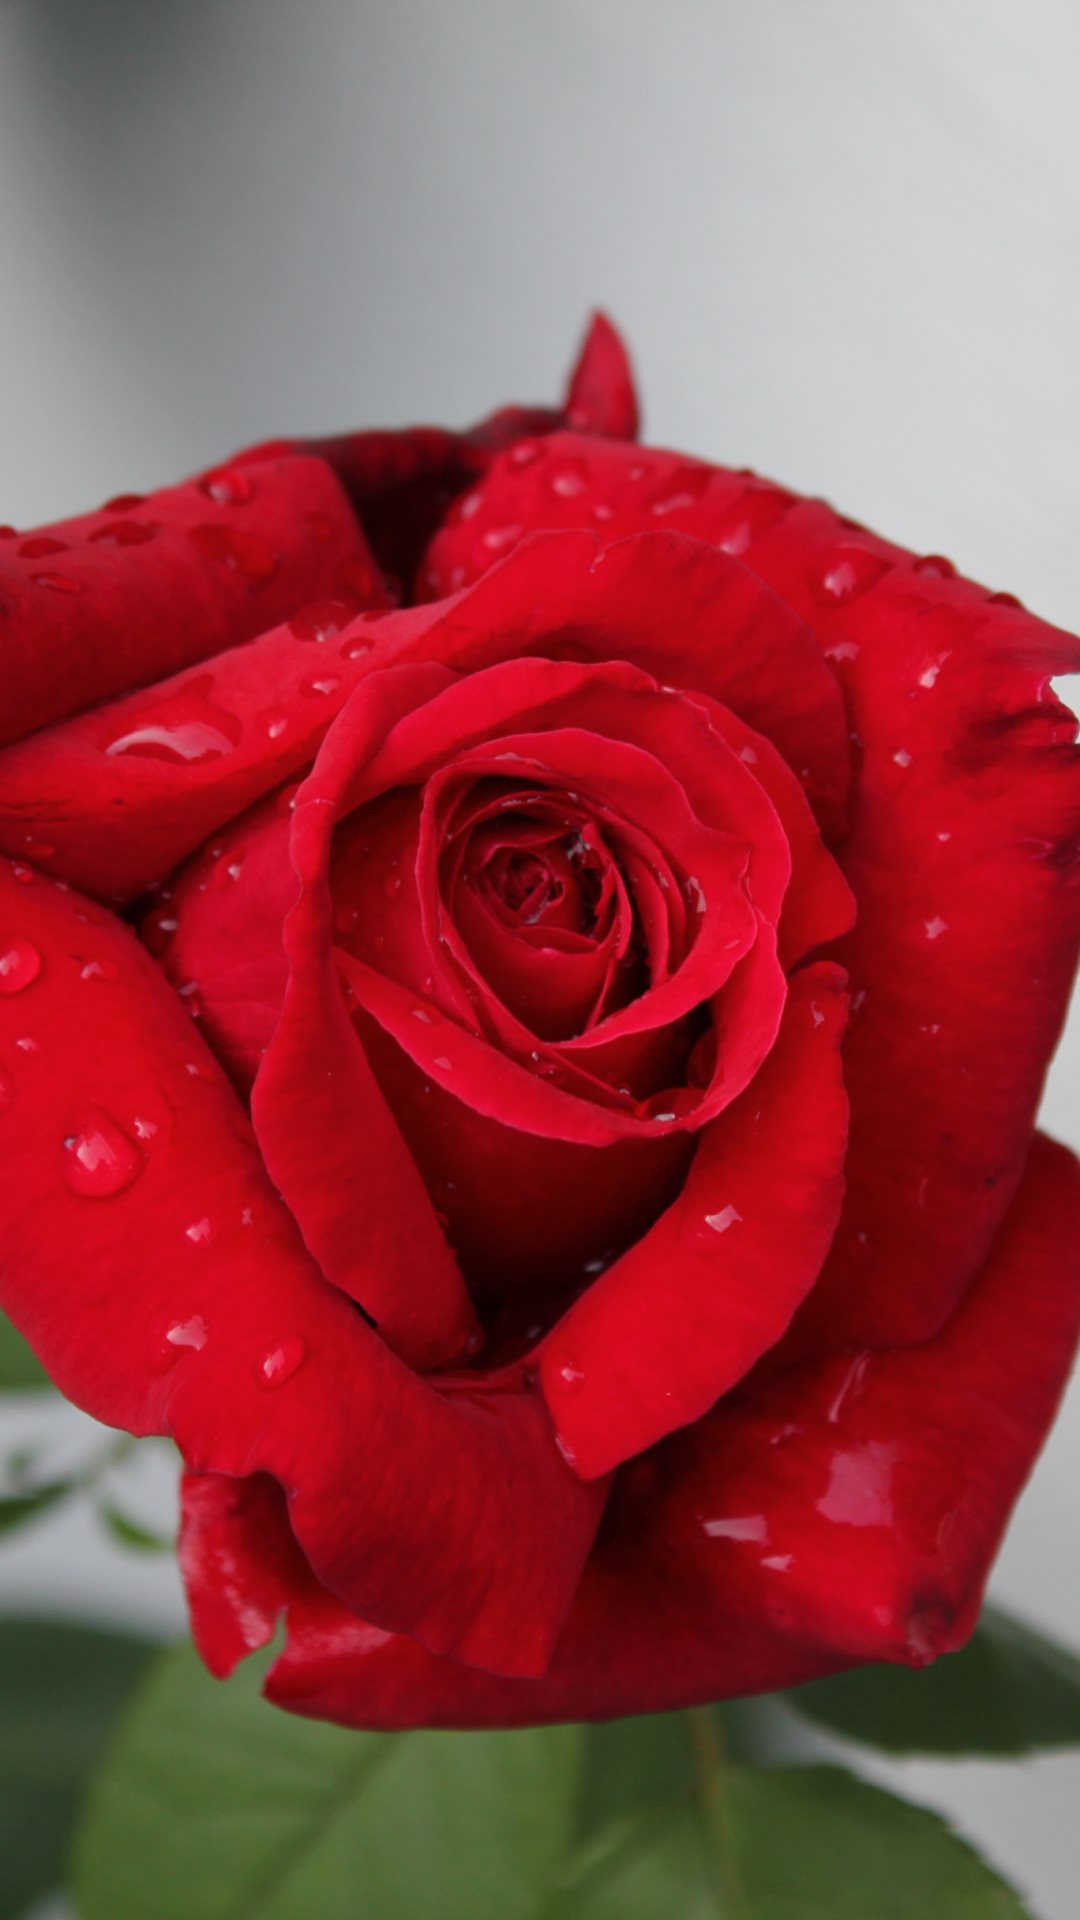 Red Rose Closeup iPhone 6 Plus HD Wallpaper HD - Free Download ...